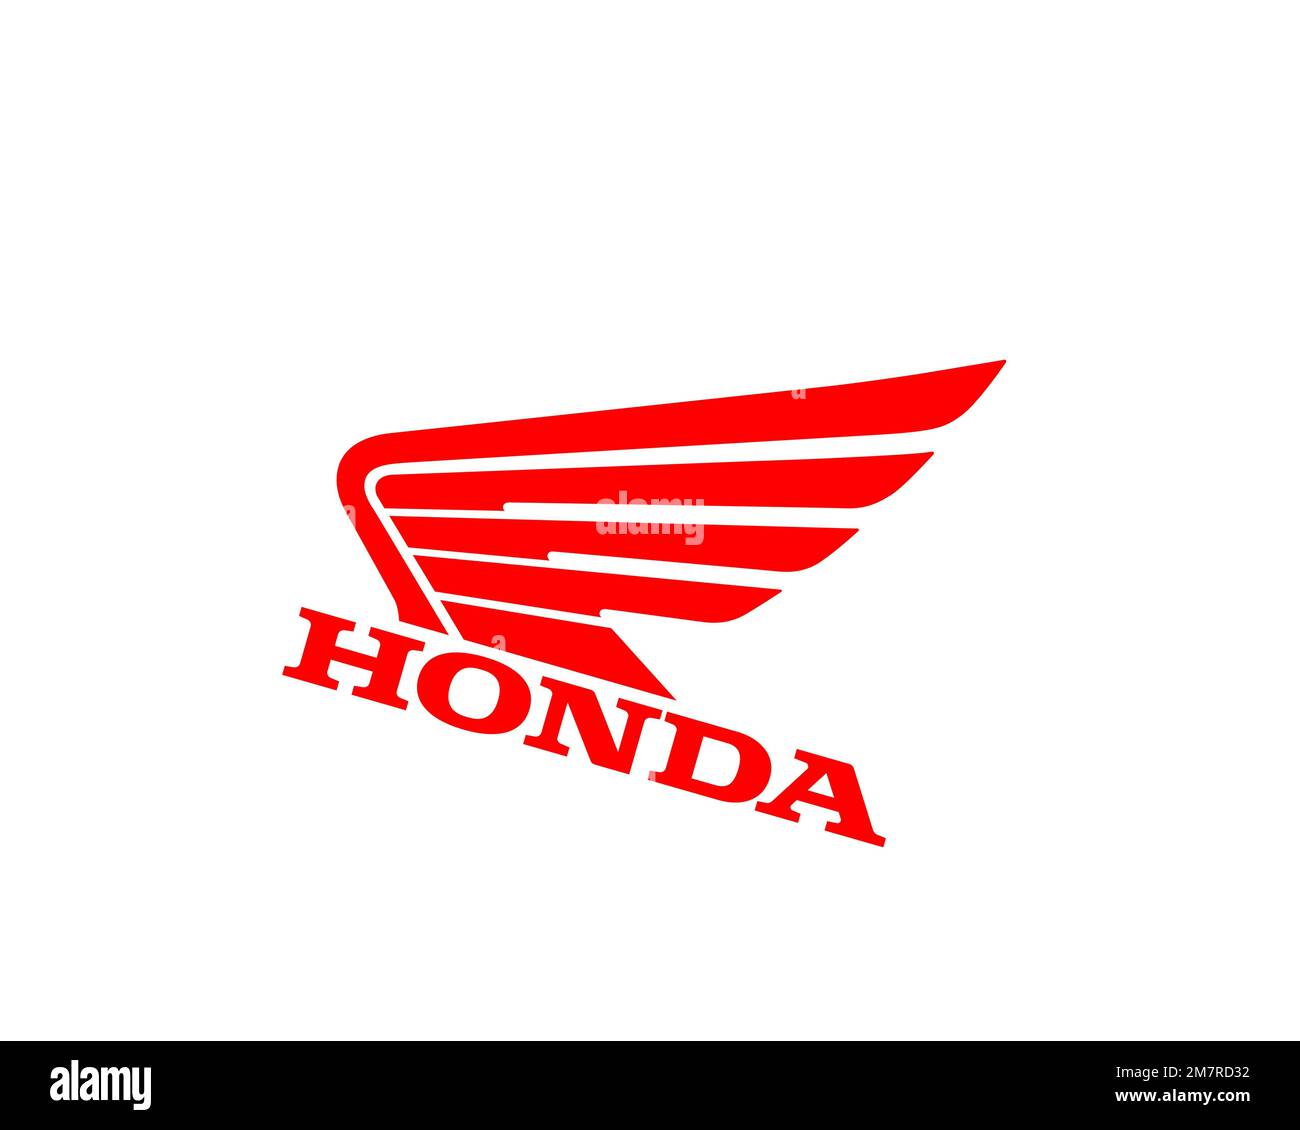 Honda Motorcycle and Scooter India, Rotated Logo, White Background B Stock Photo